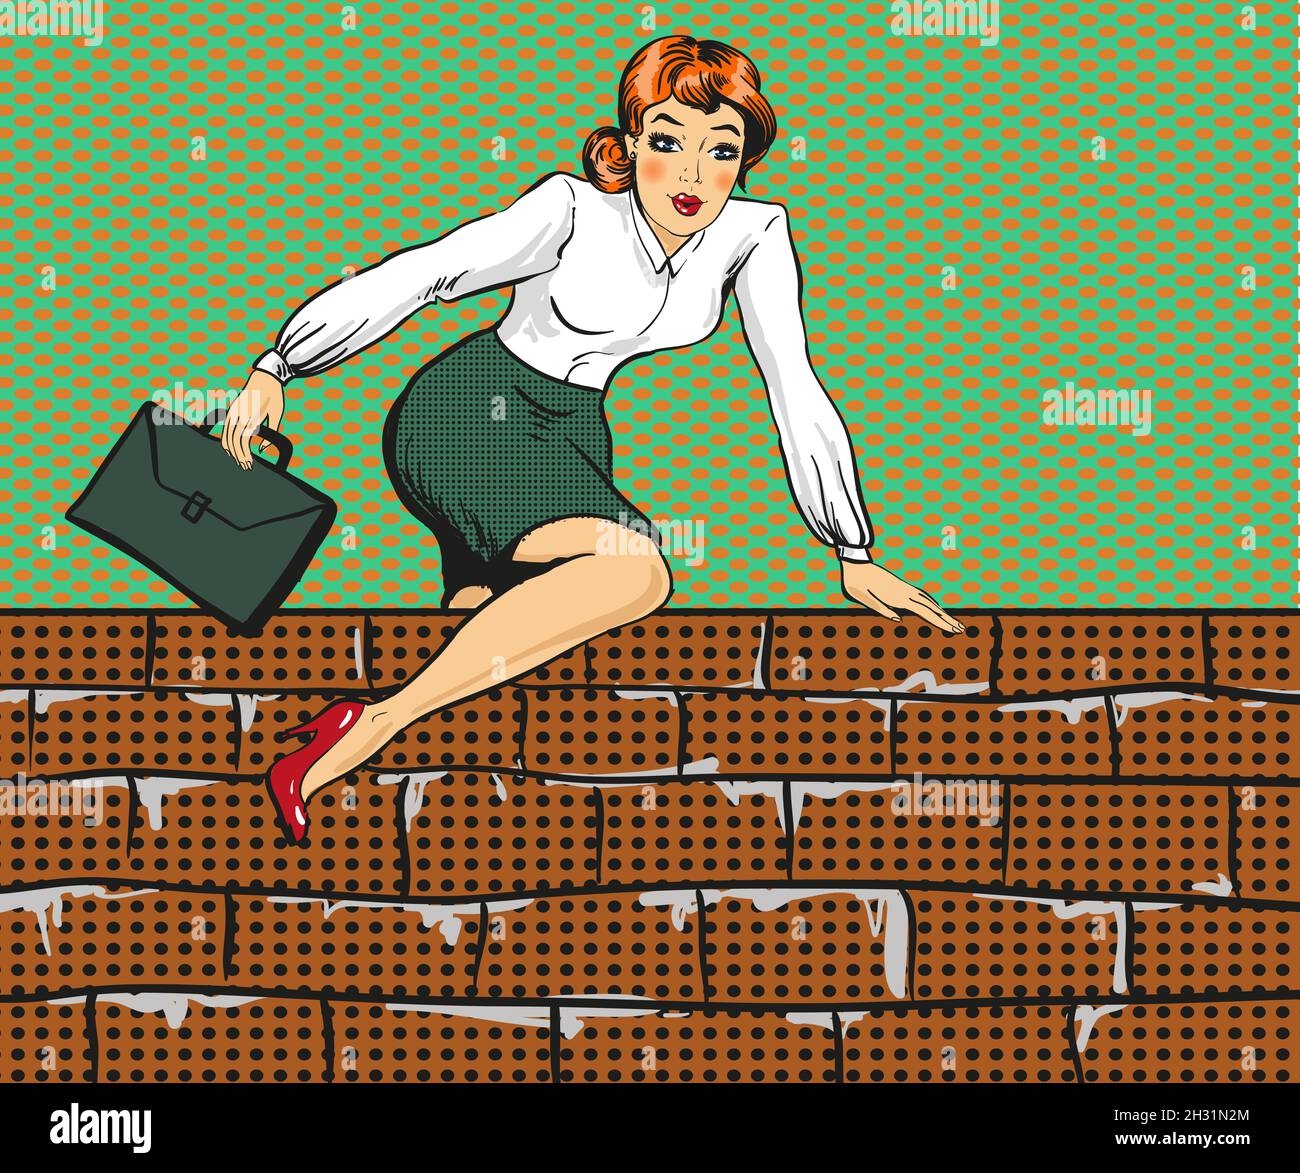 Vektor-Illustration von Frau klettern über Zaun, Pop-Art-Stil Stock Vektor